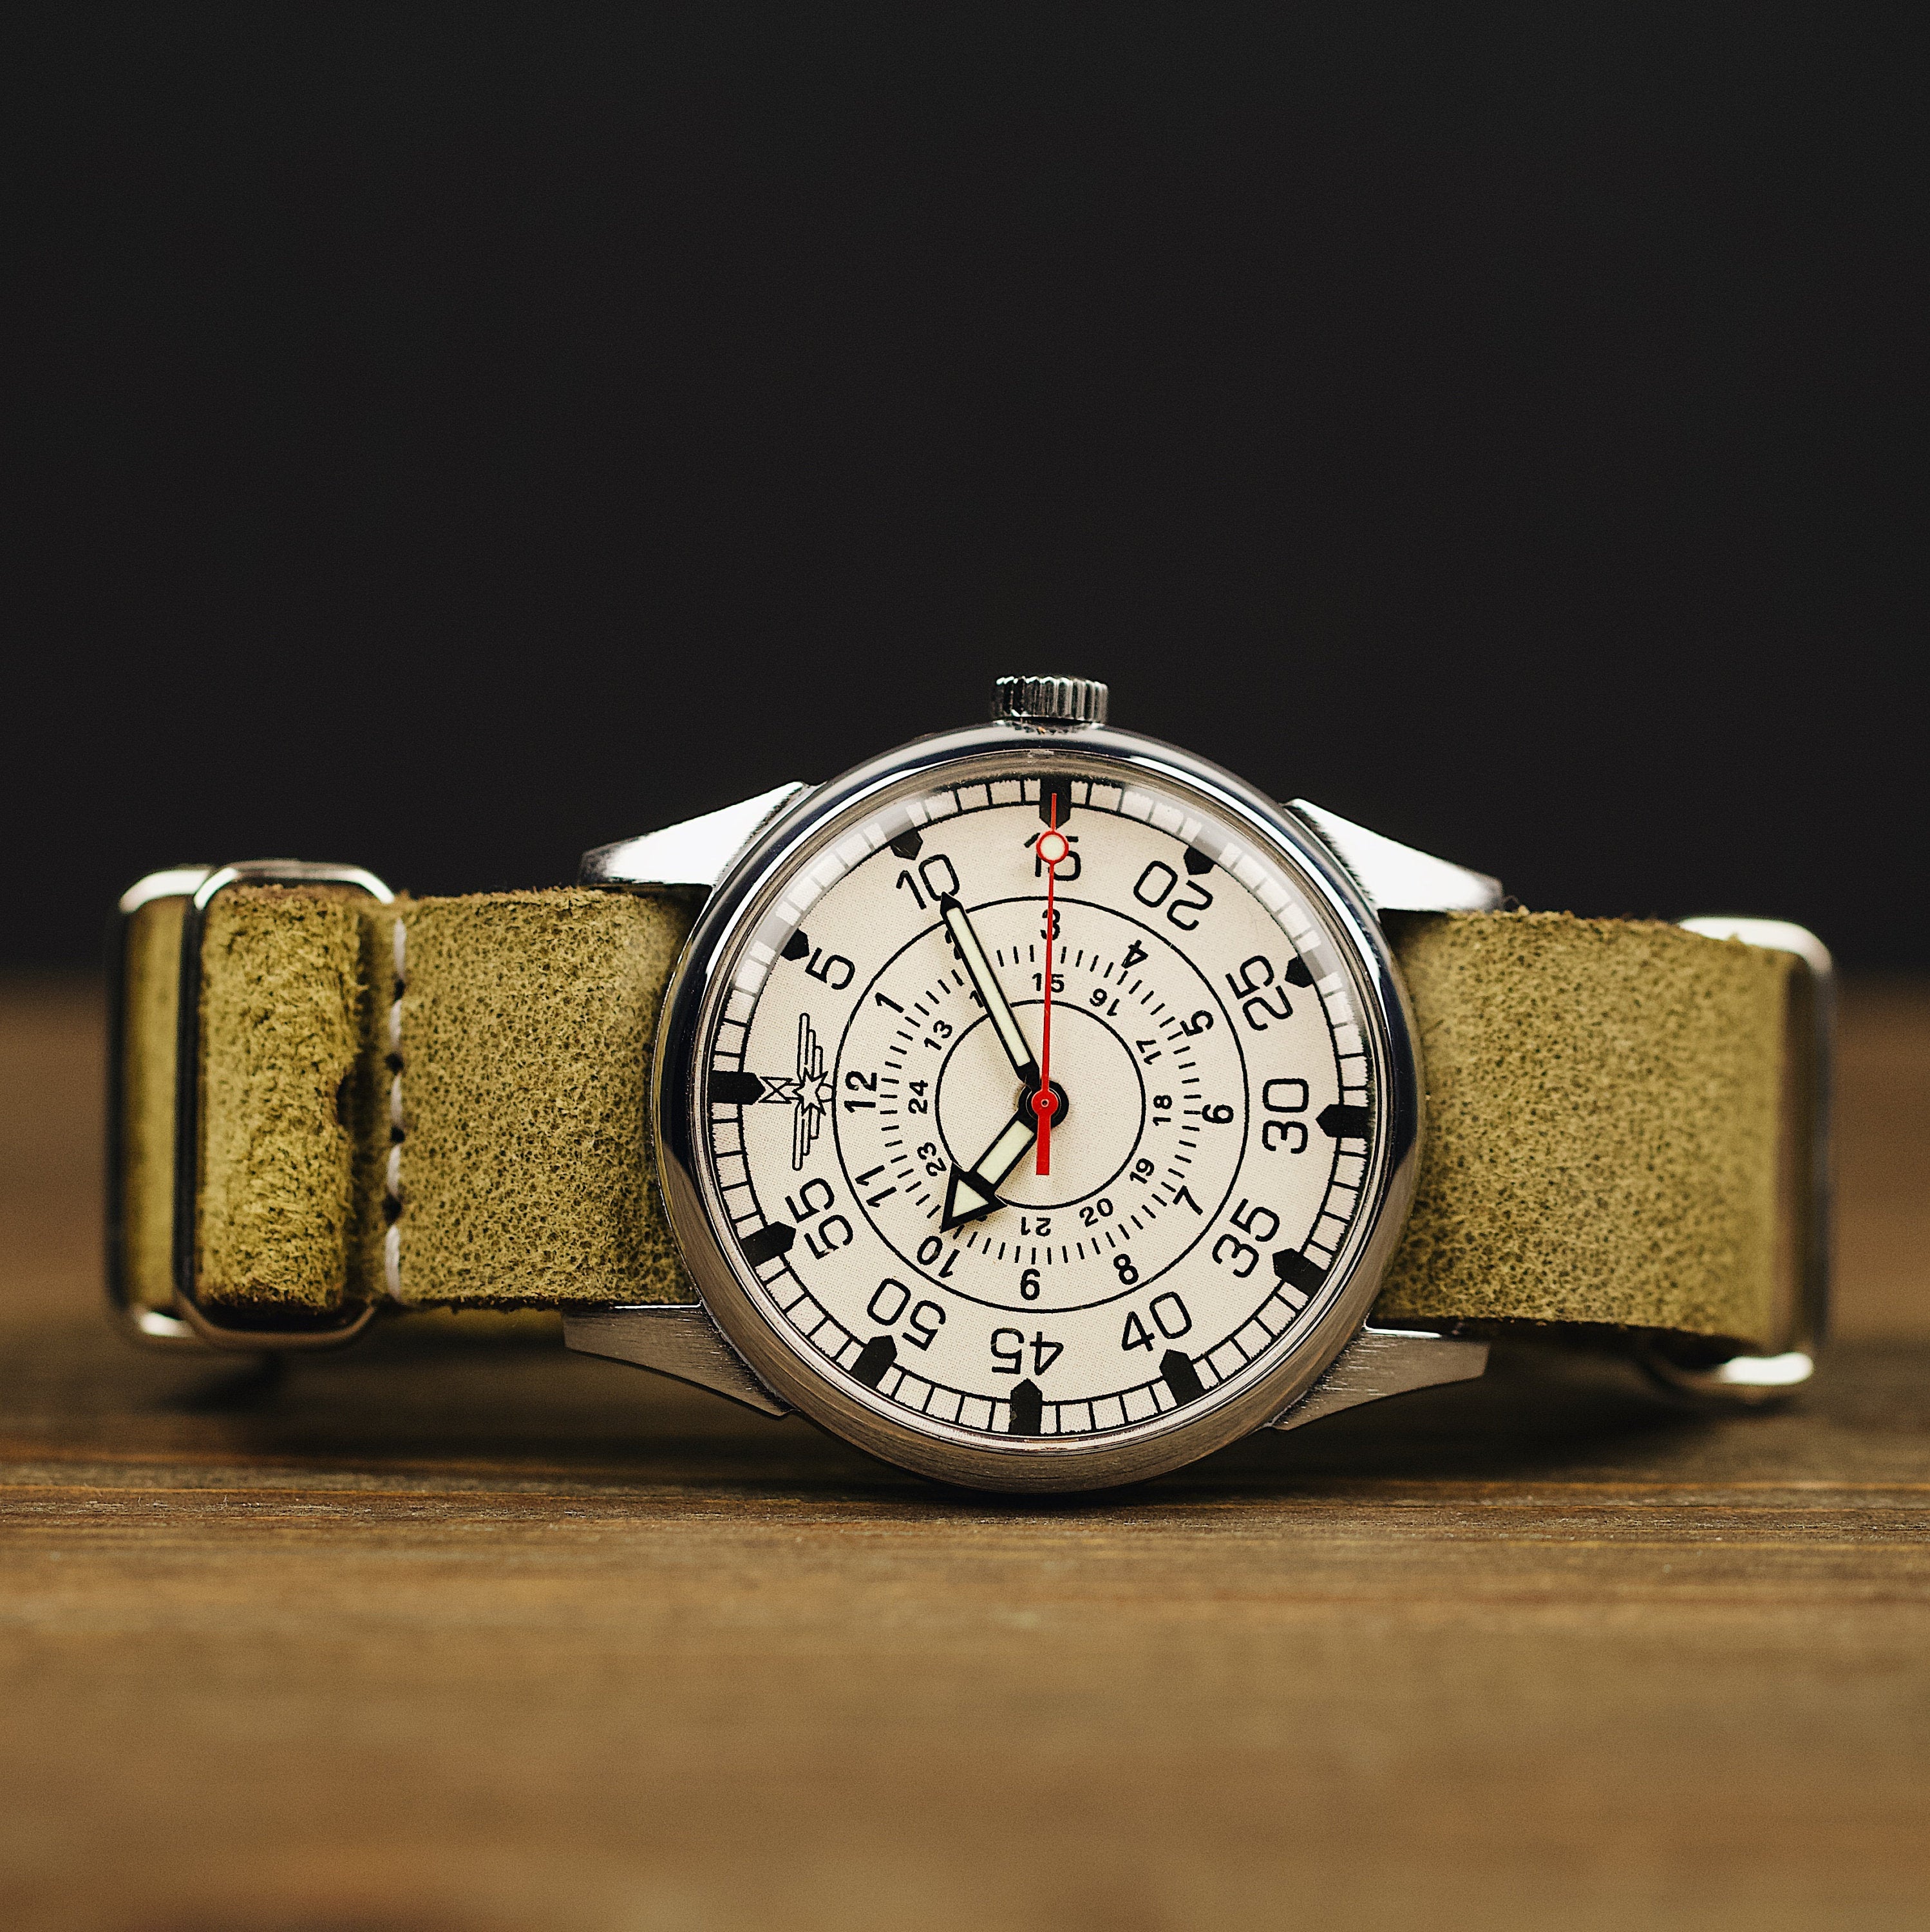 Soviet vintage wrist military watch Aviator with leather nato strap